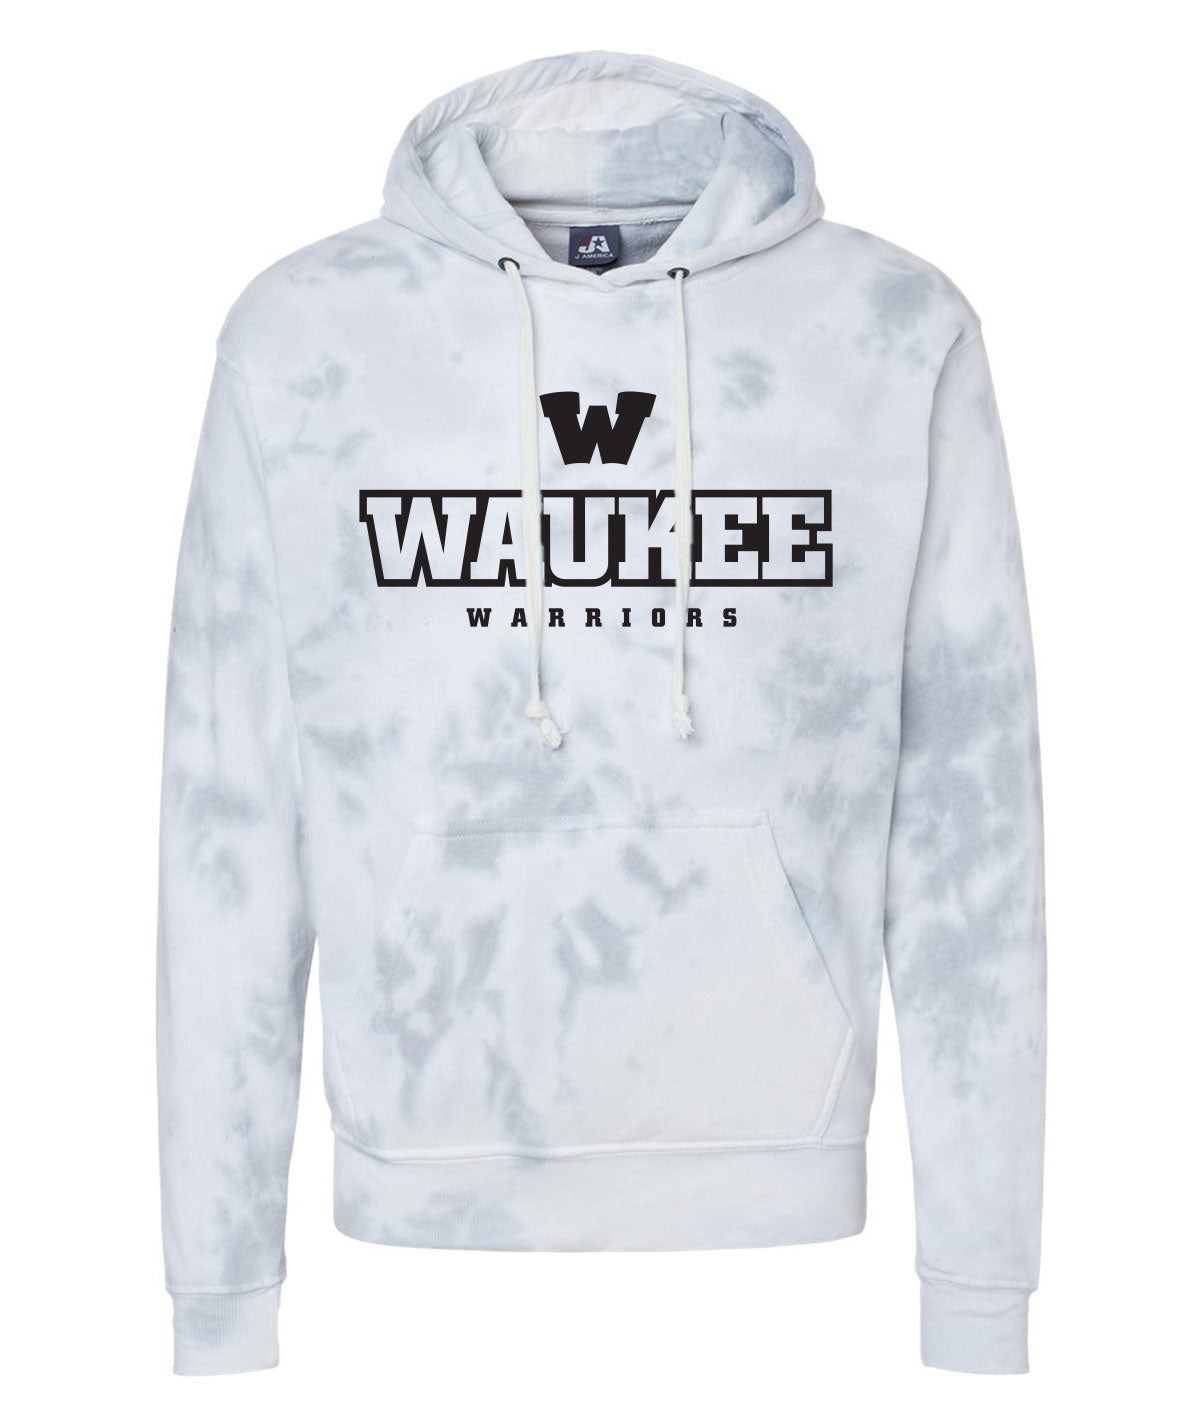 Waukee Warriors Tie-Dye Hoodie